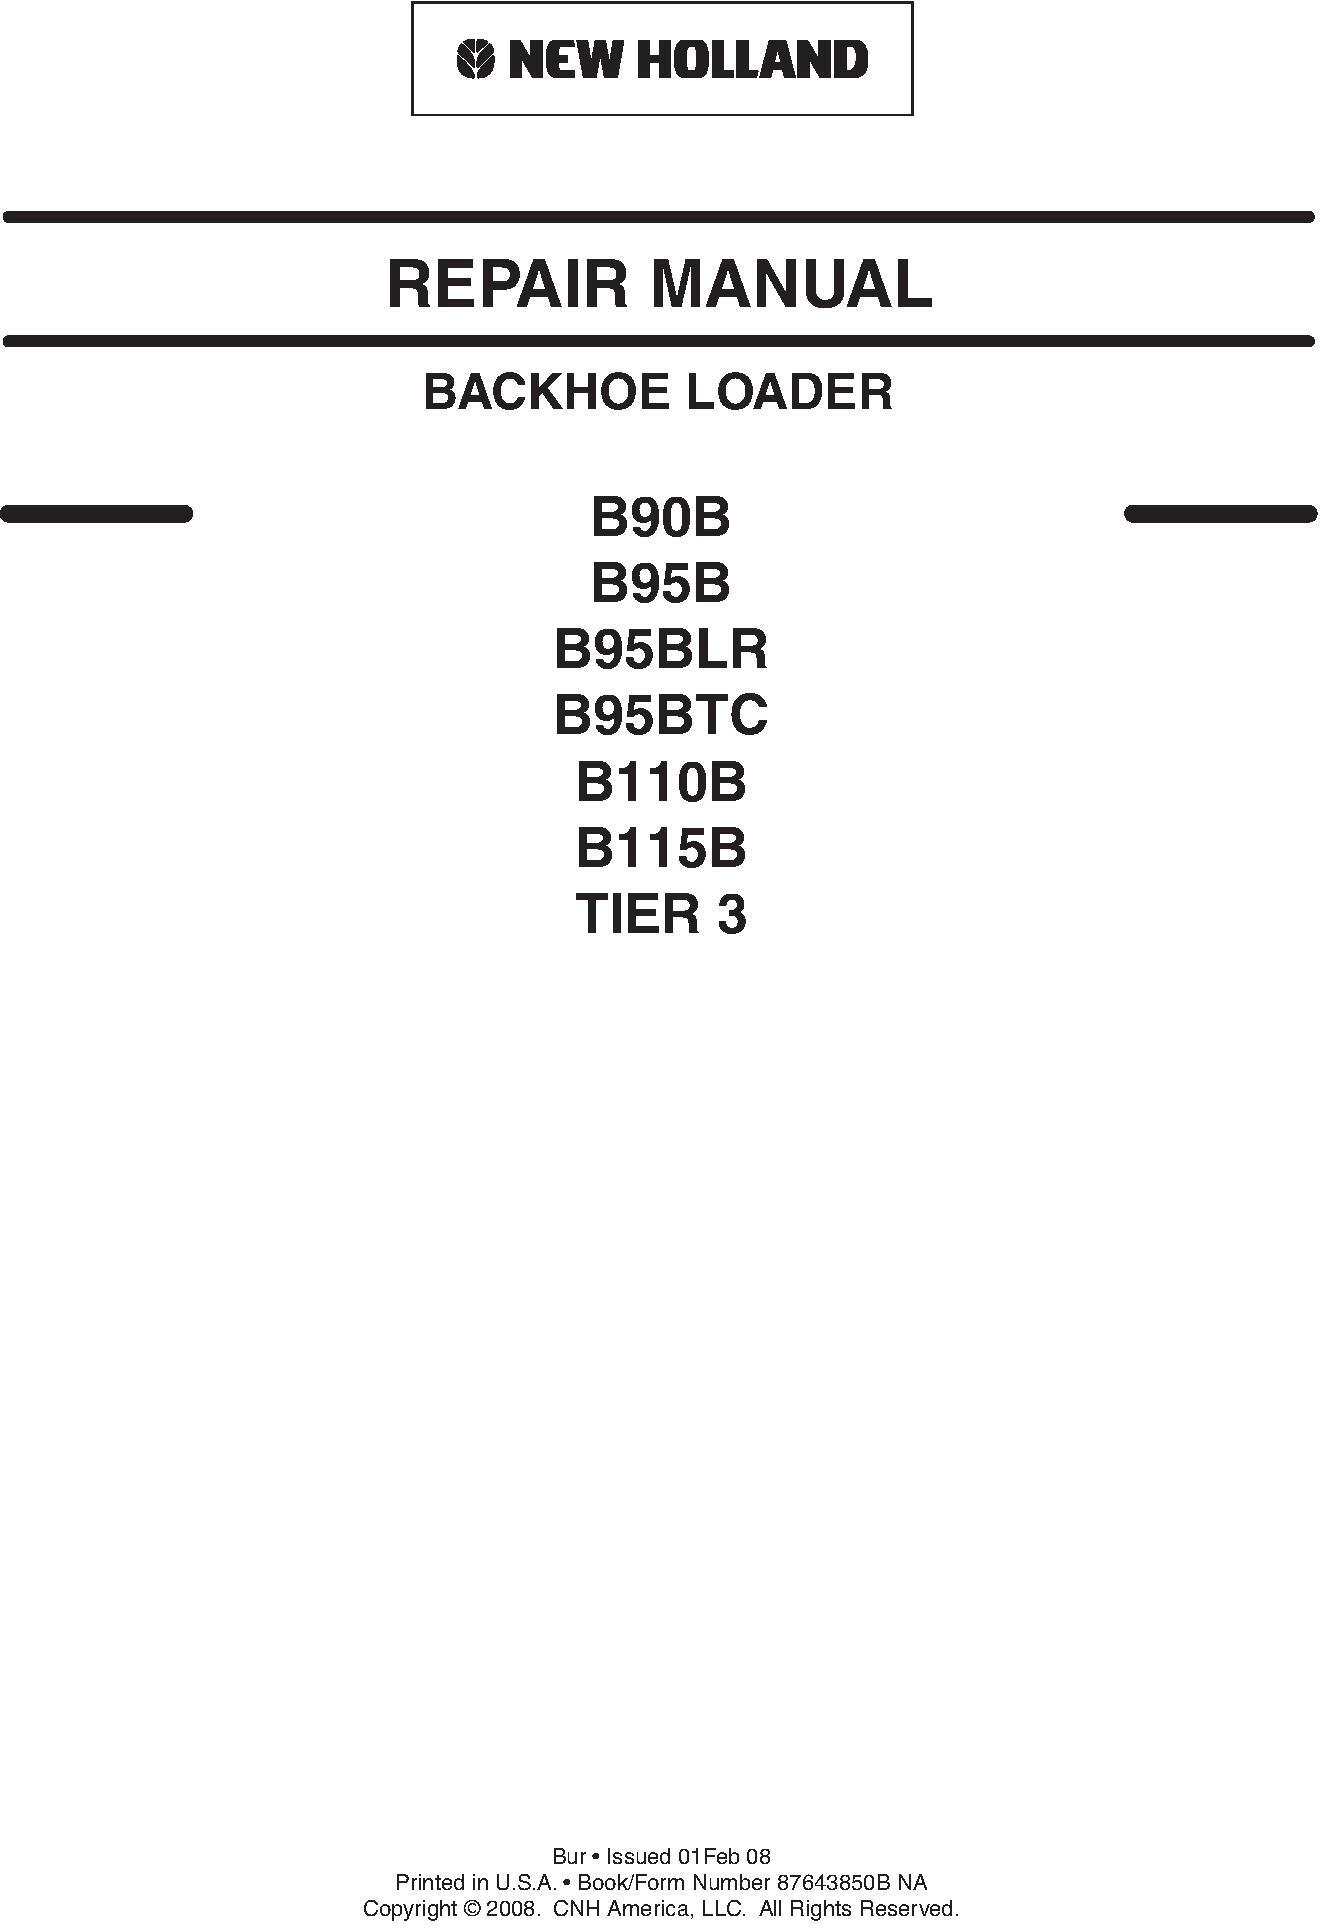 New Holland B90B, B95B, B95BLR, B95BTC, B110B, B115B Tier 3 Backhoe Loader Service Manual - 19947